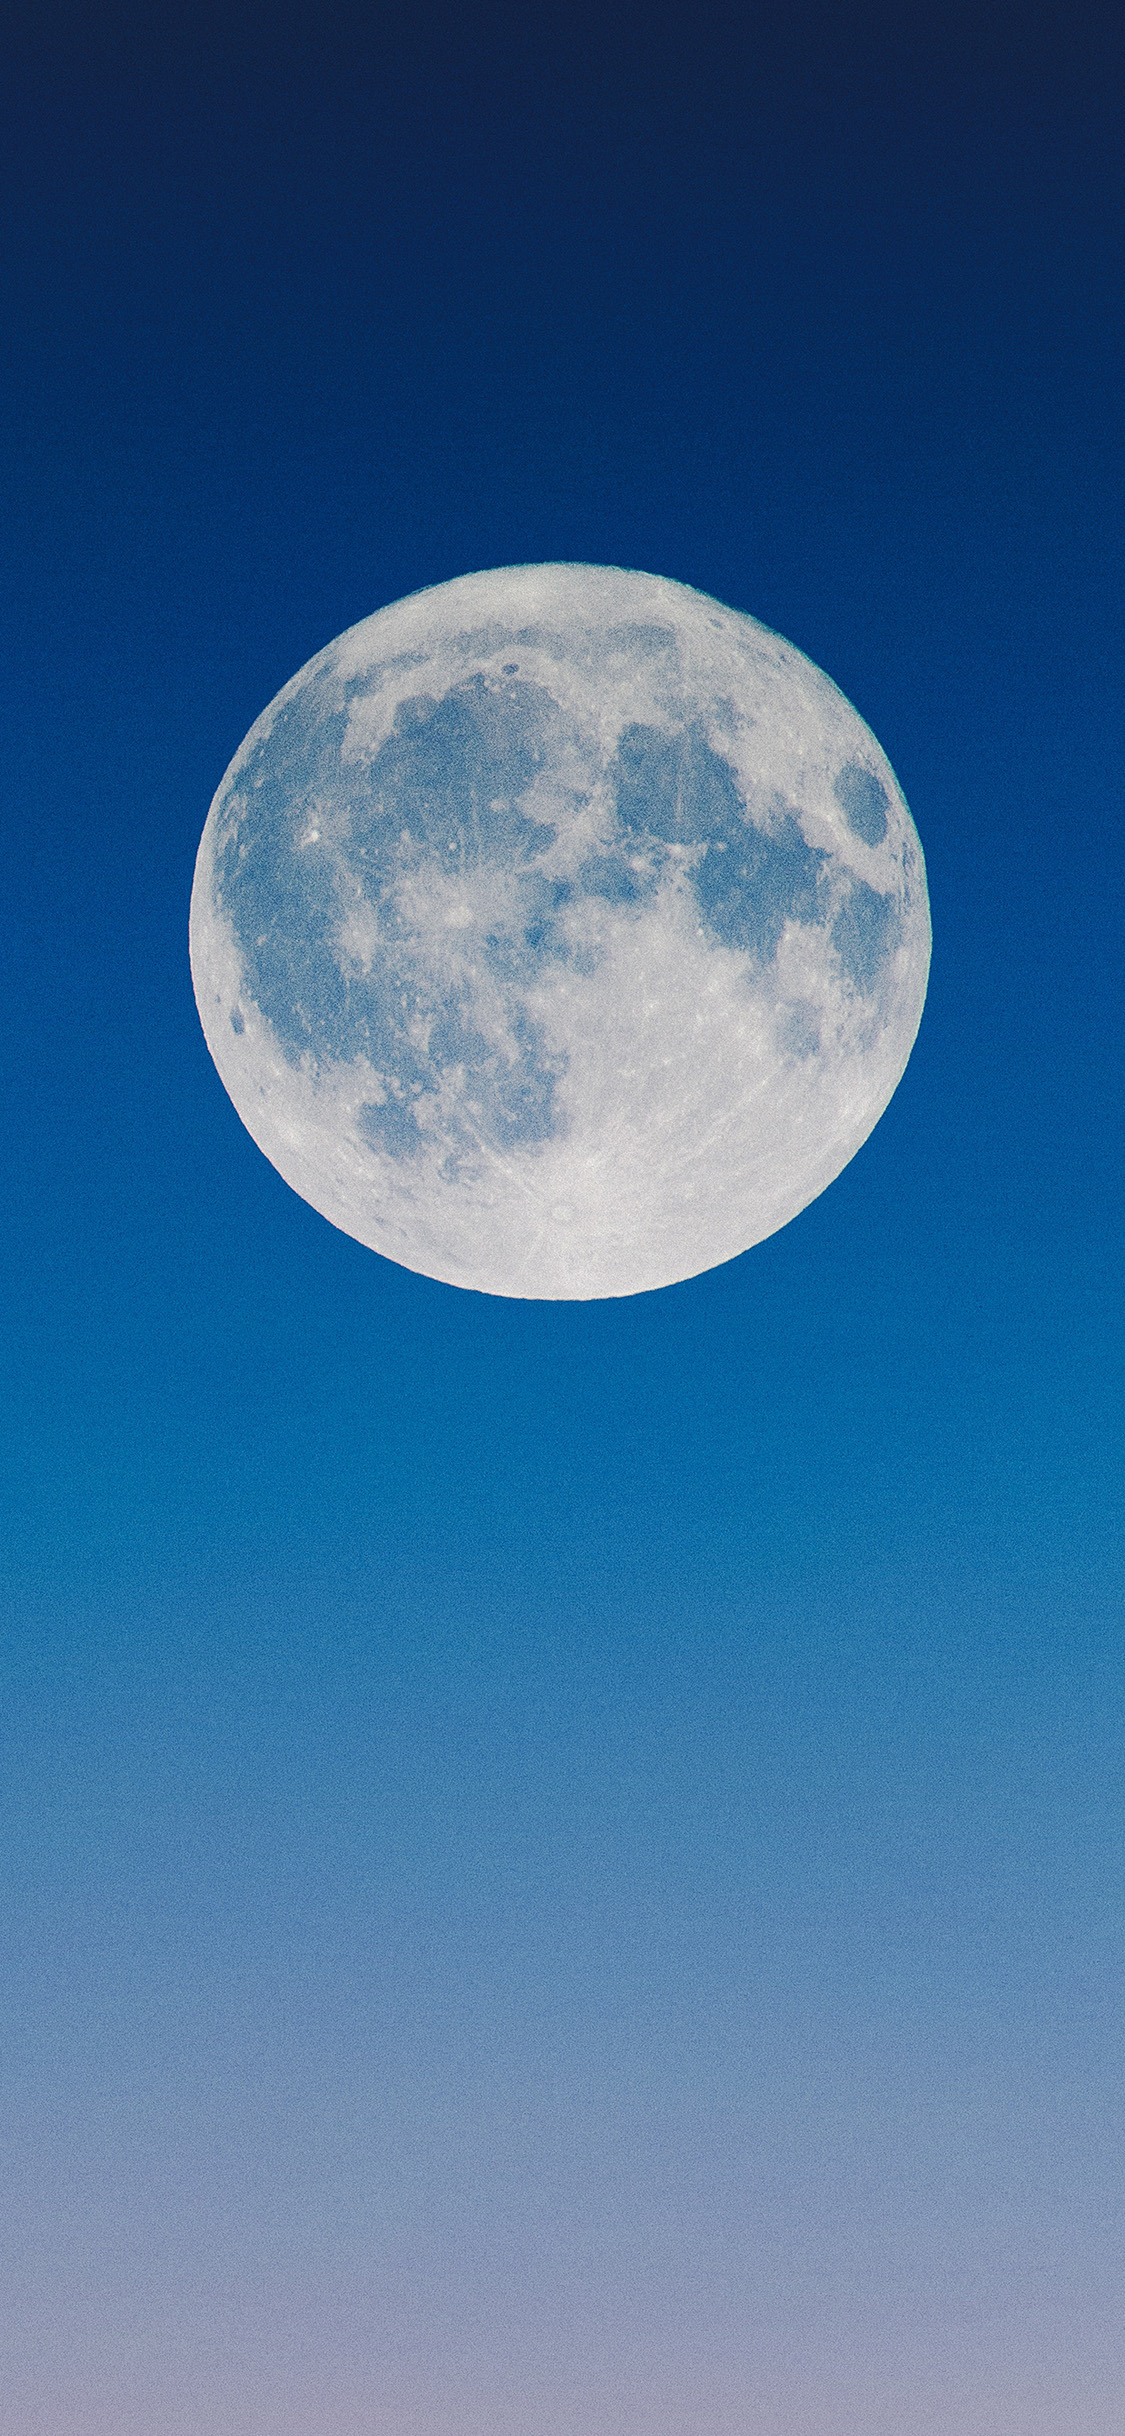 月壁紙iphone,月,空,昼間,自然,青い